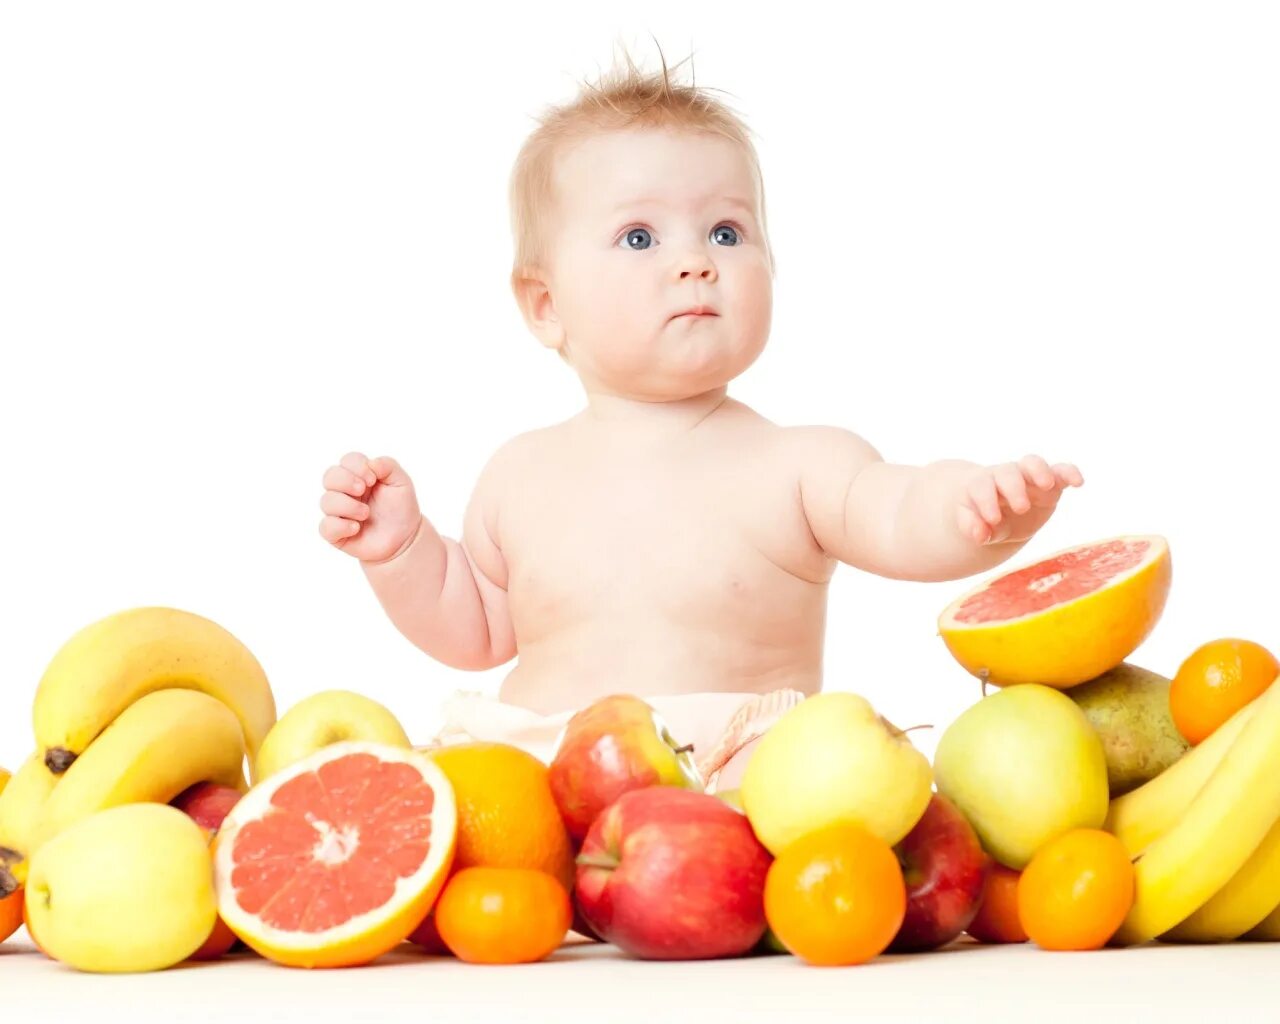 Around baby. Фрукты для детей. Овощи и фрукты для детей. Малыш питание. Здоровый малыш.